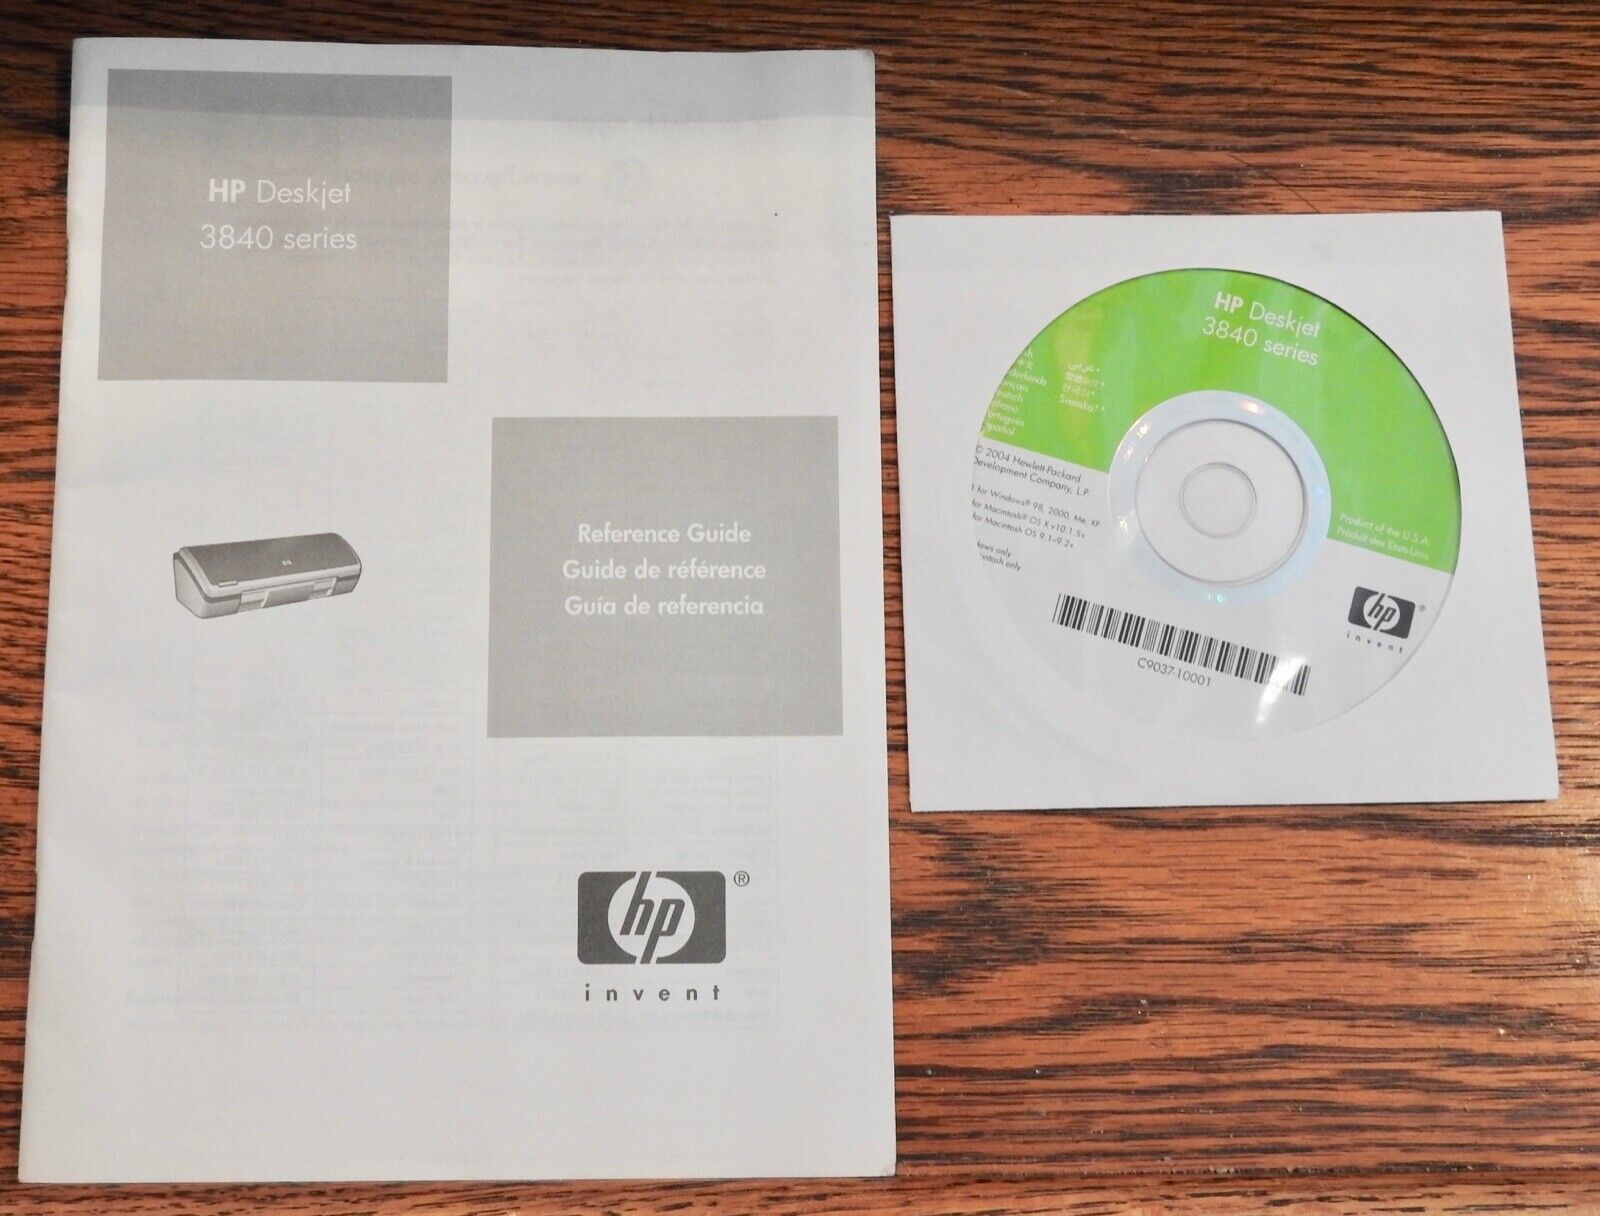 Hp Deskjet 3840 Series Book & Printer Drivers And Utilities Cd Windows/mac